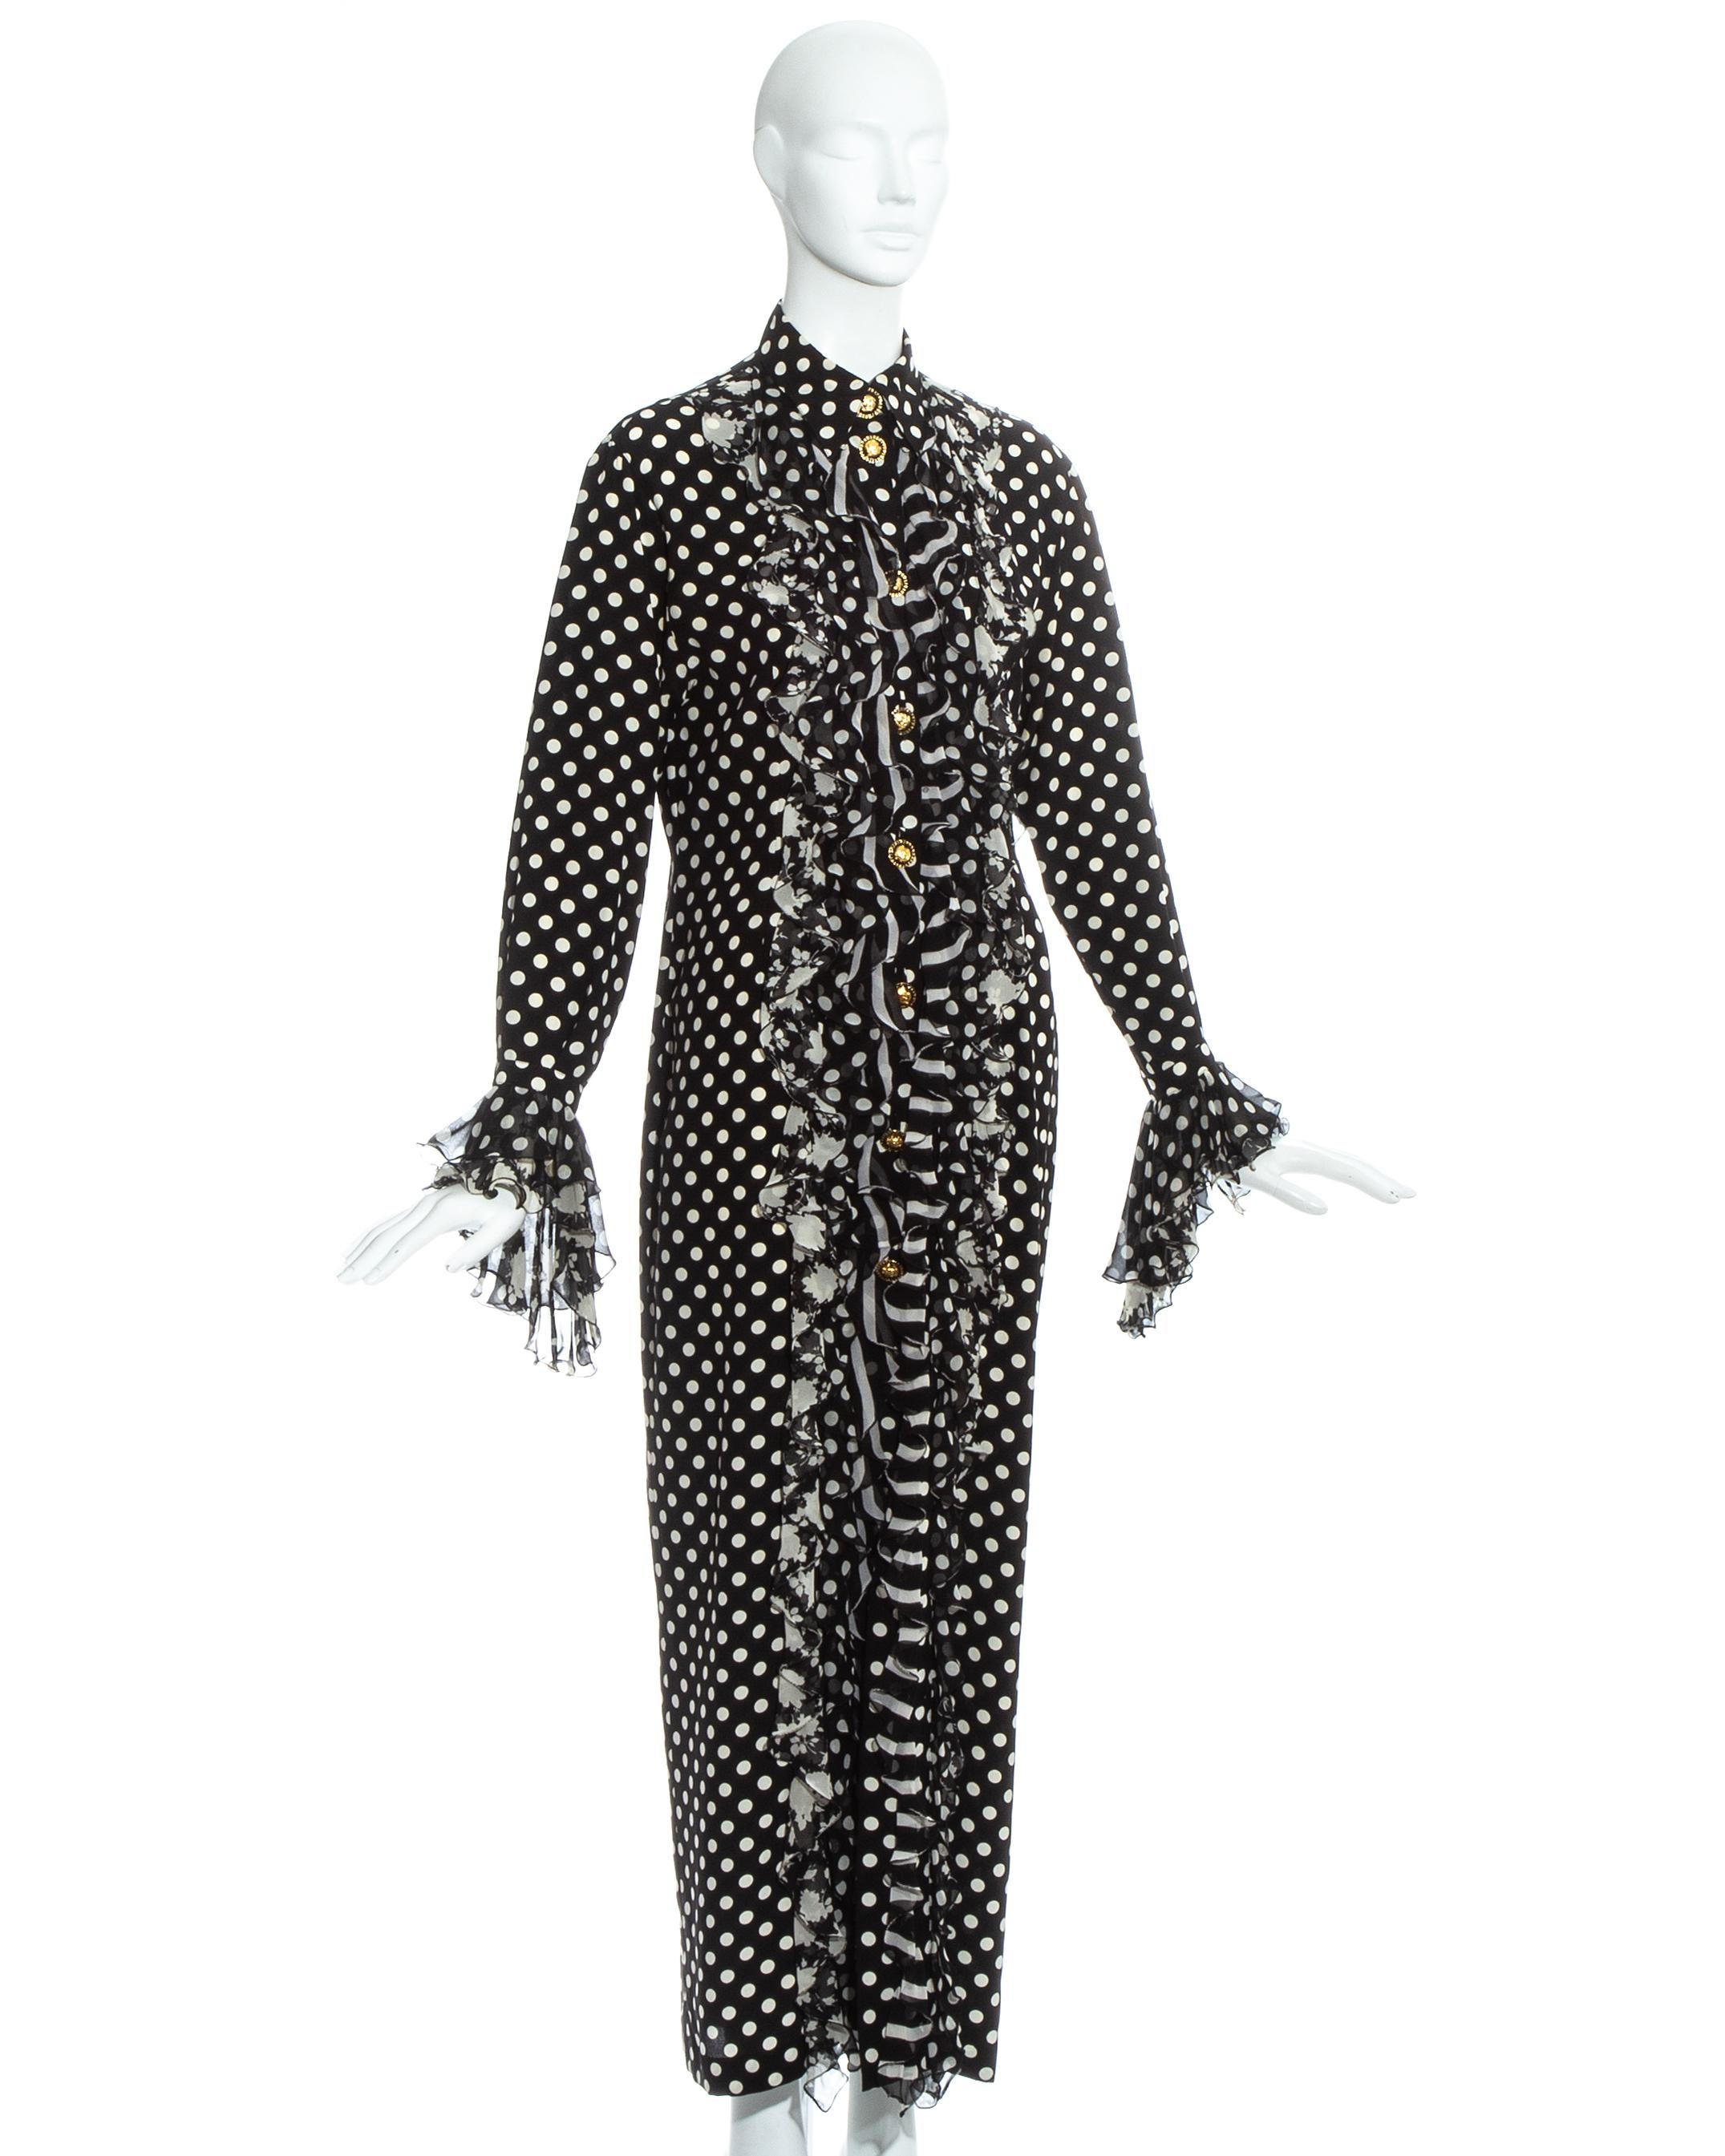 Gianni Versace black and white polkadot silk ruffled shirt dress, ss 1993 2